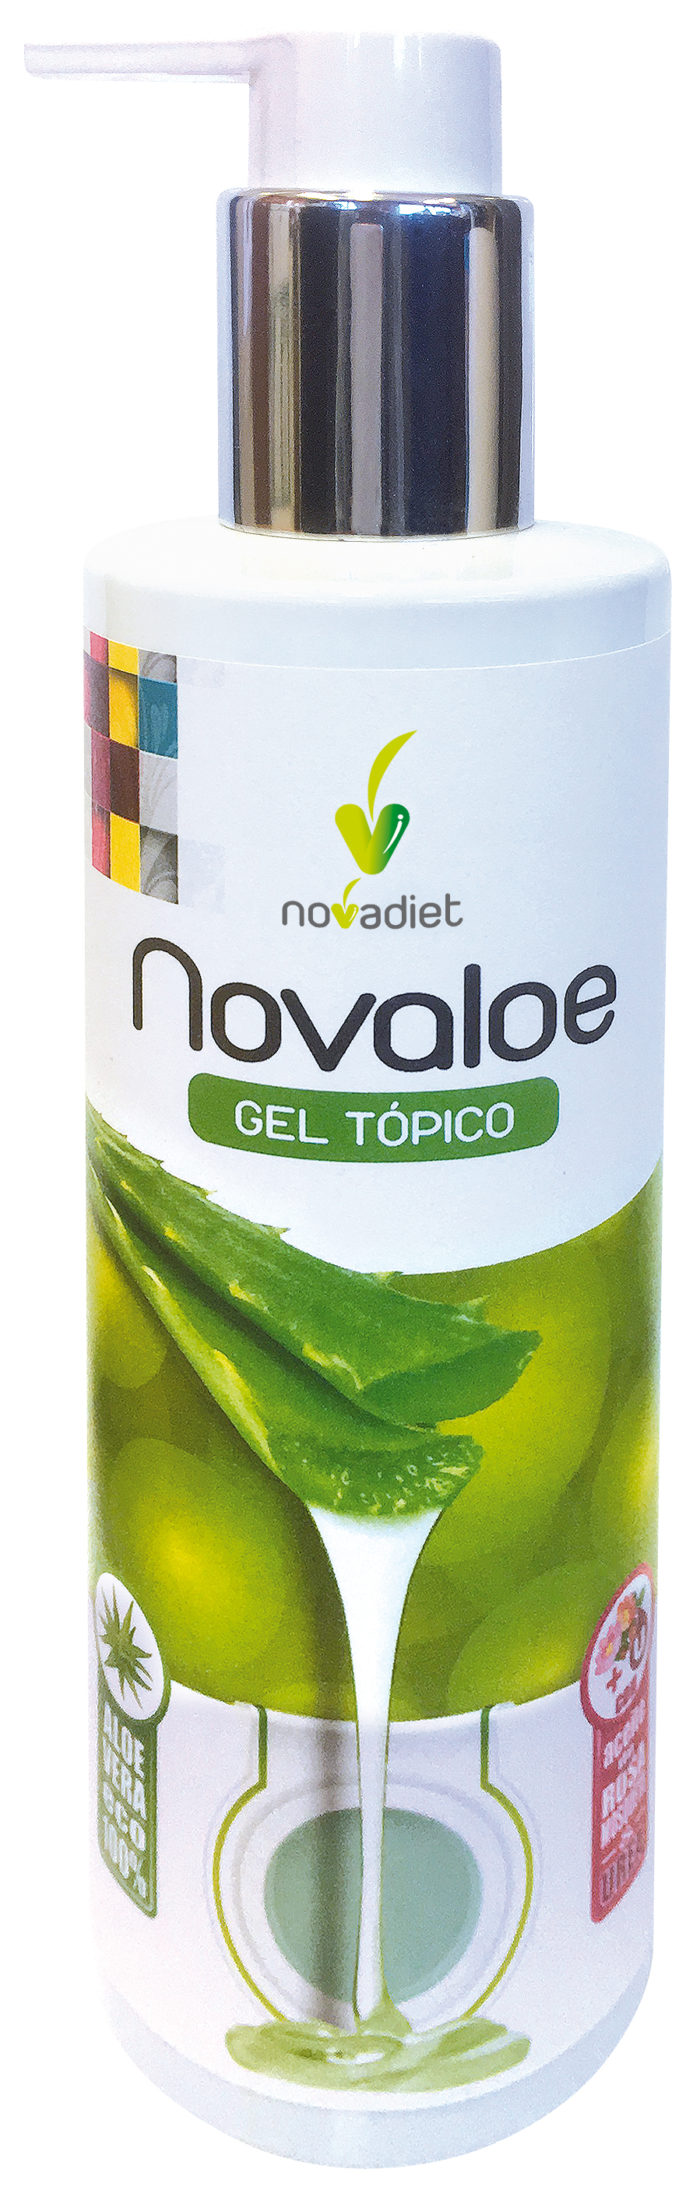 Novaloe gel